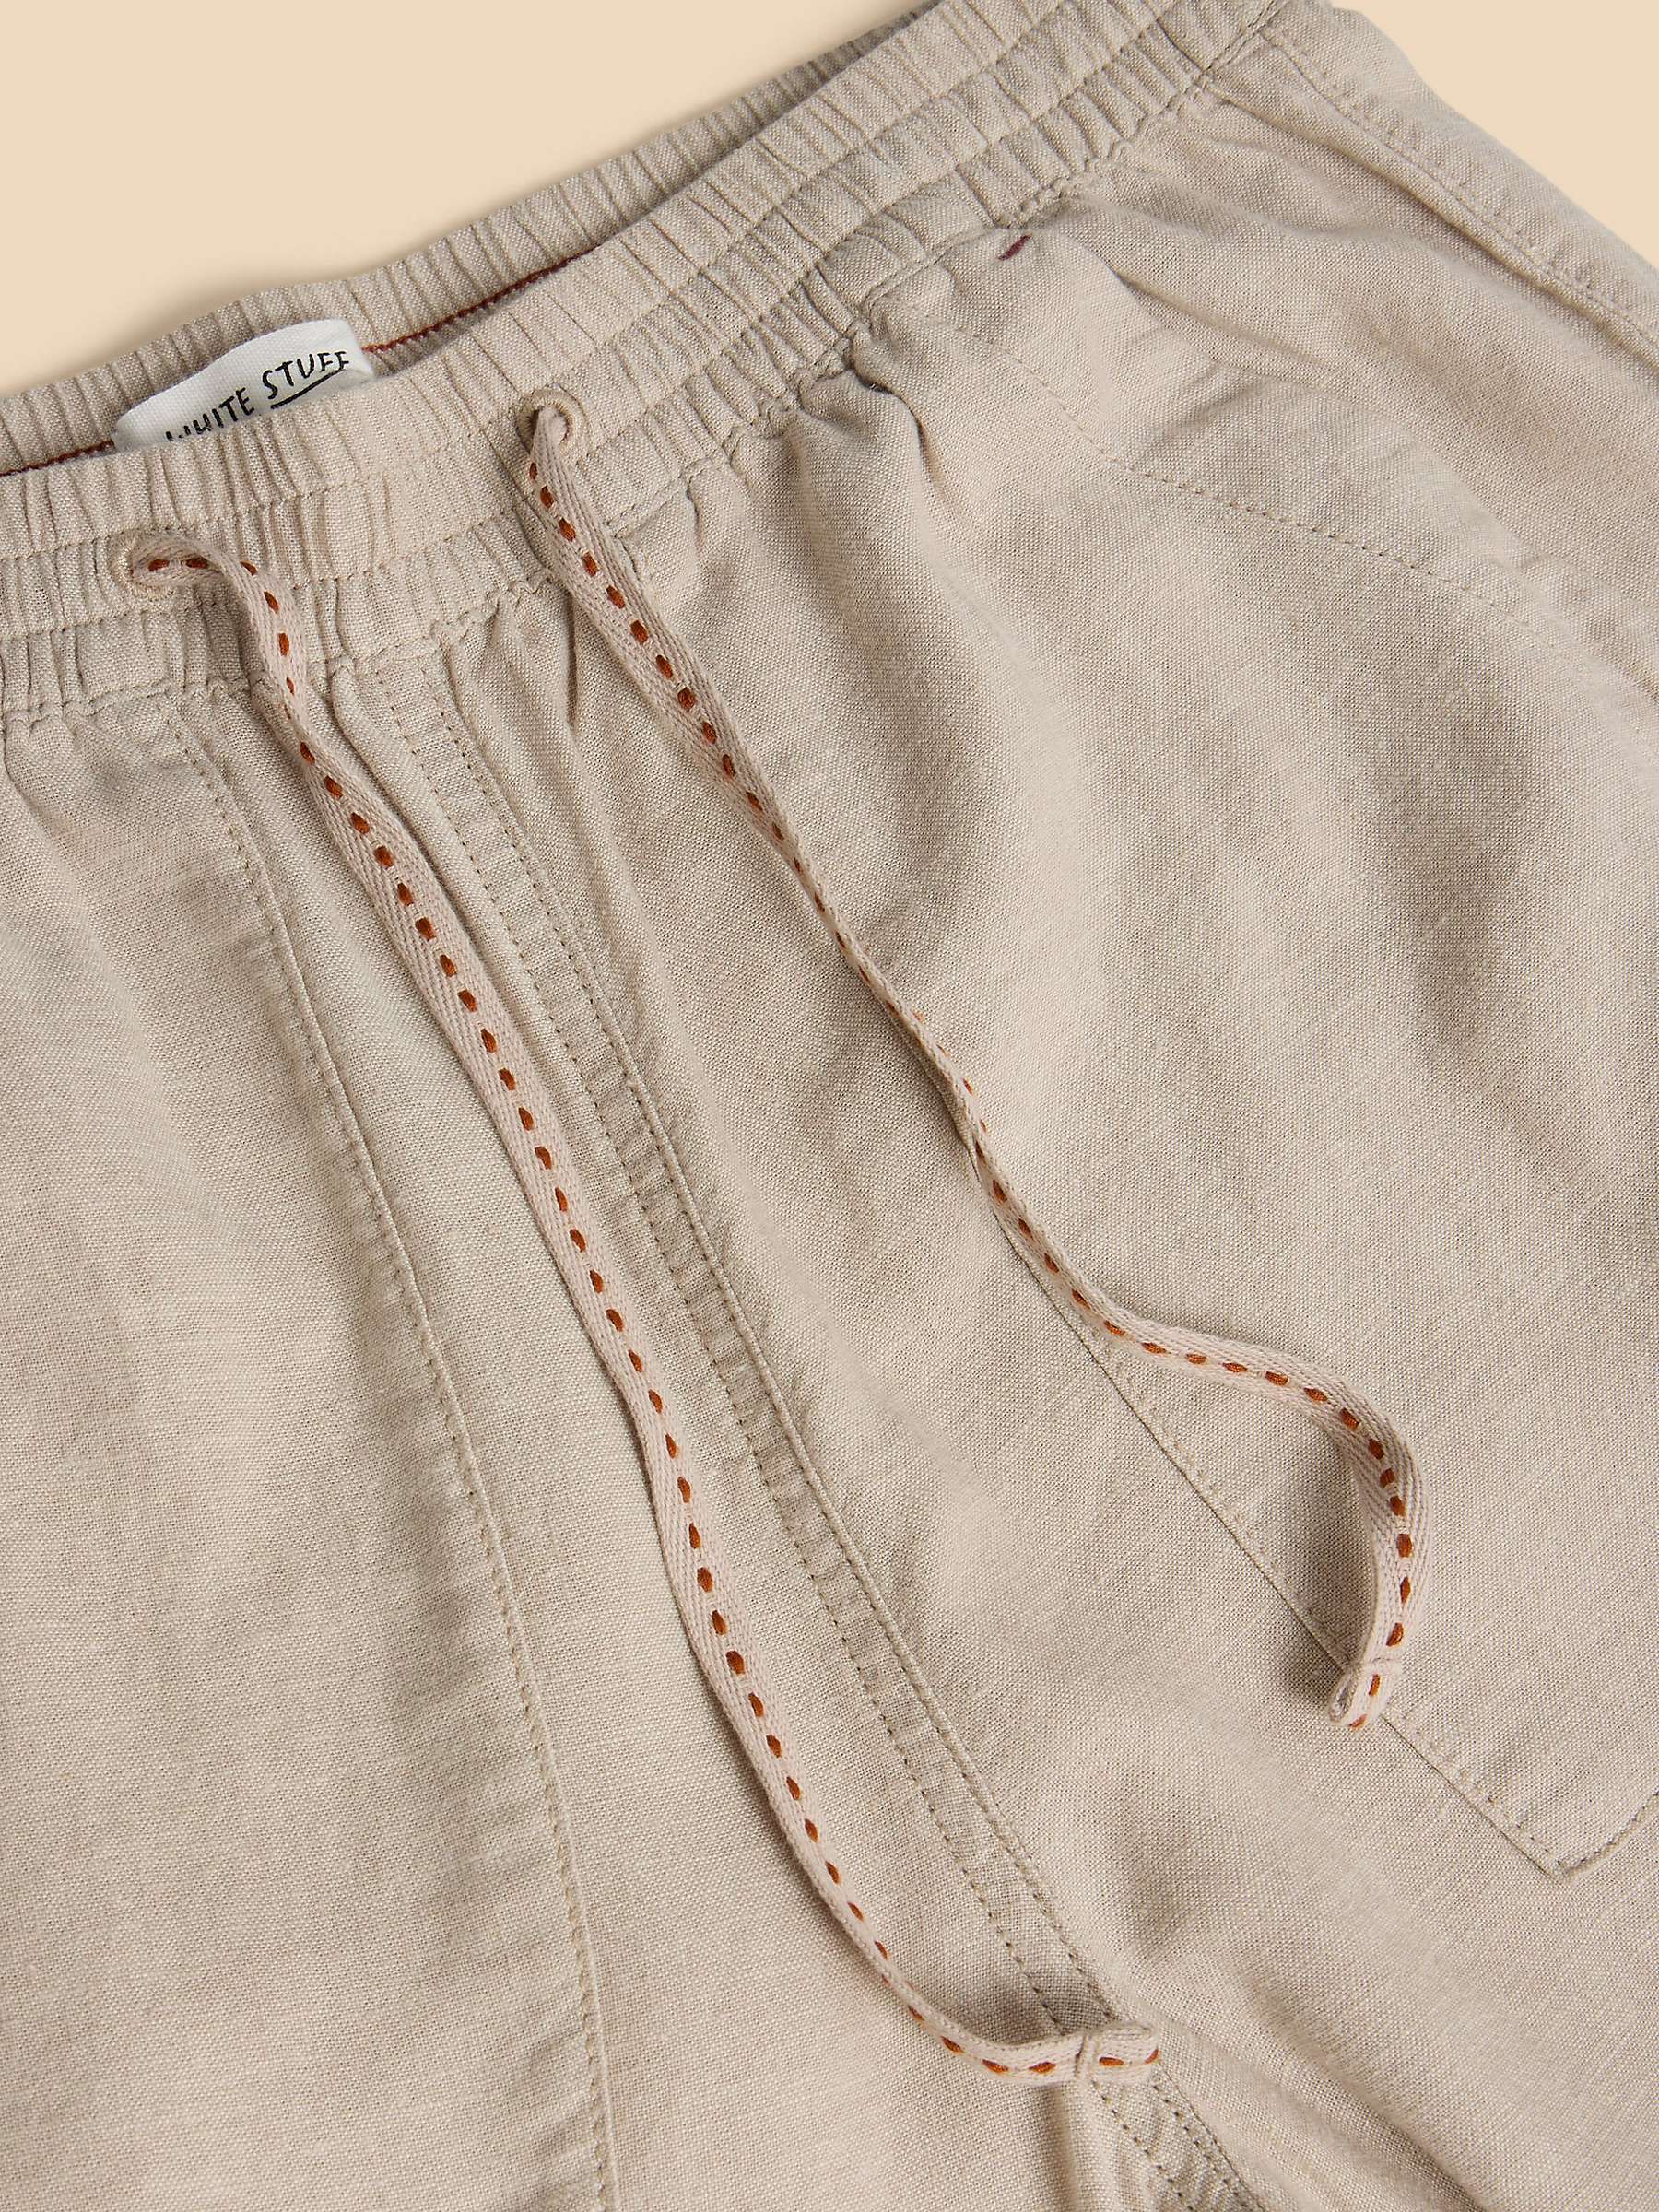 Buy White Stuff Elle Linen Blend Trousers Online at johnlewis.com